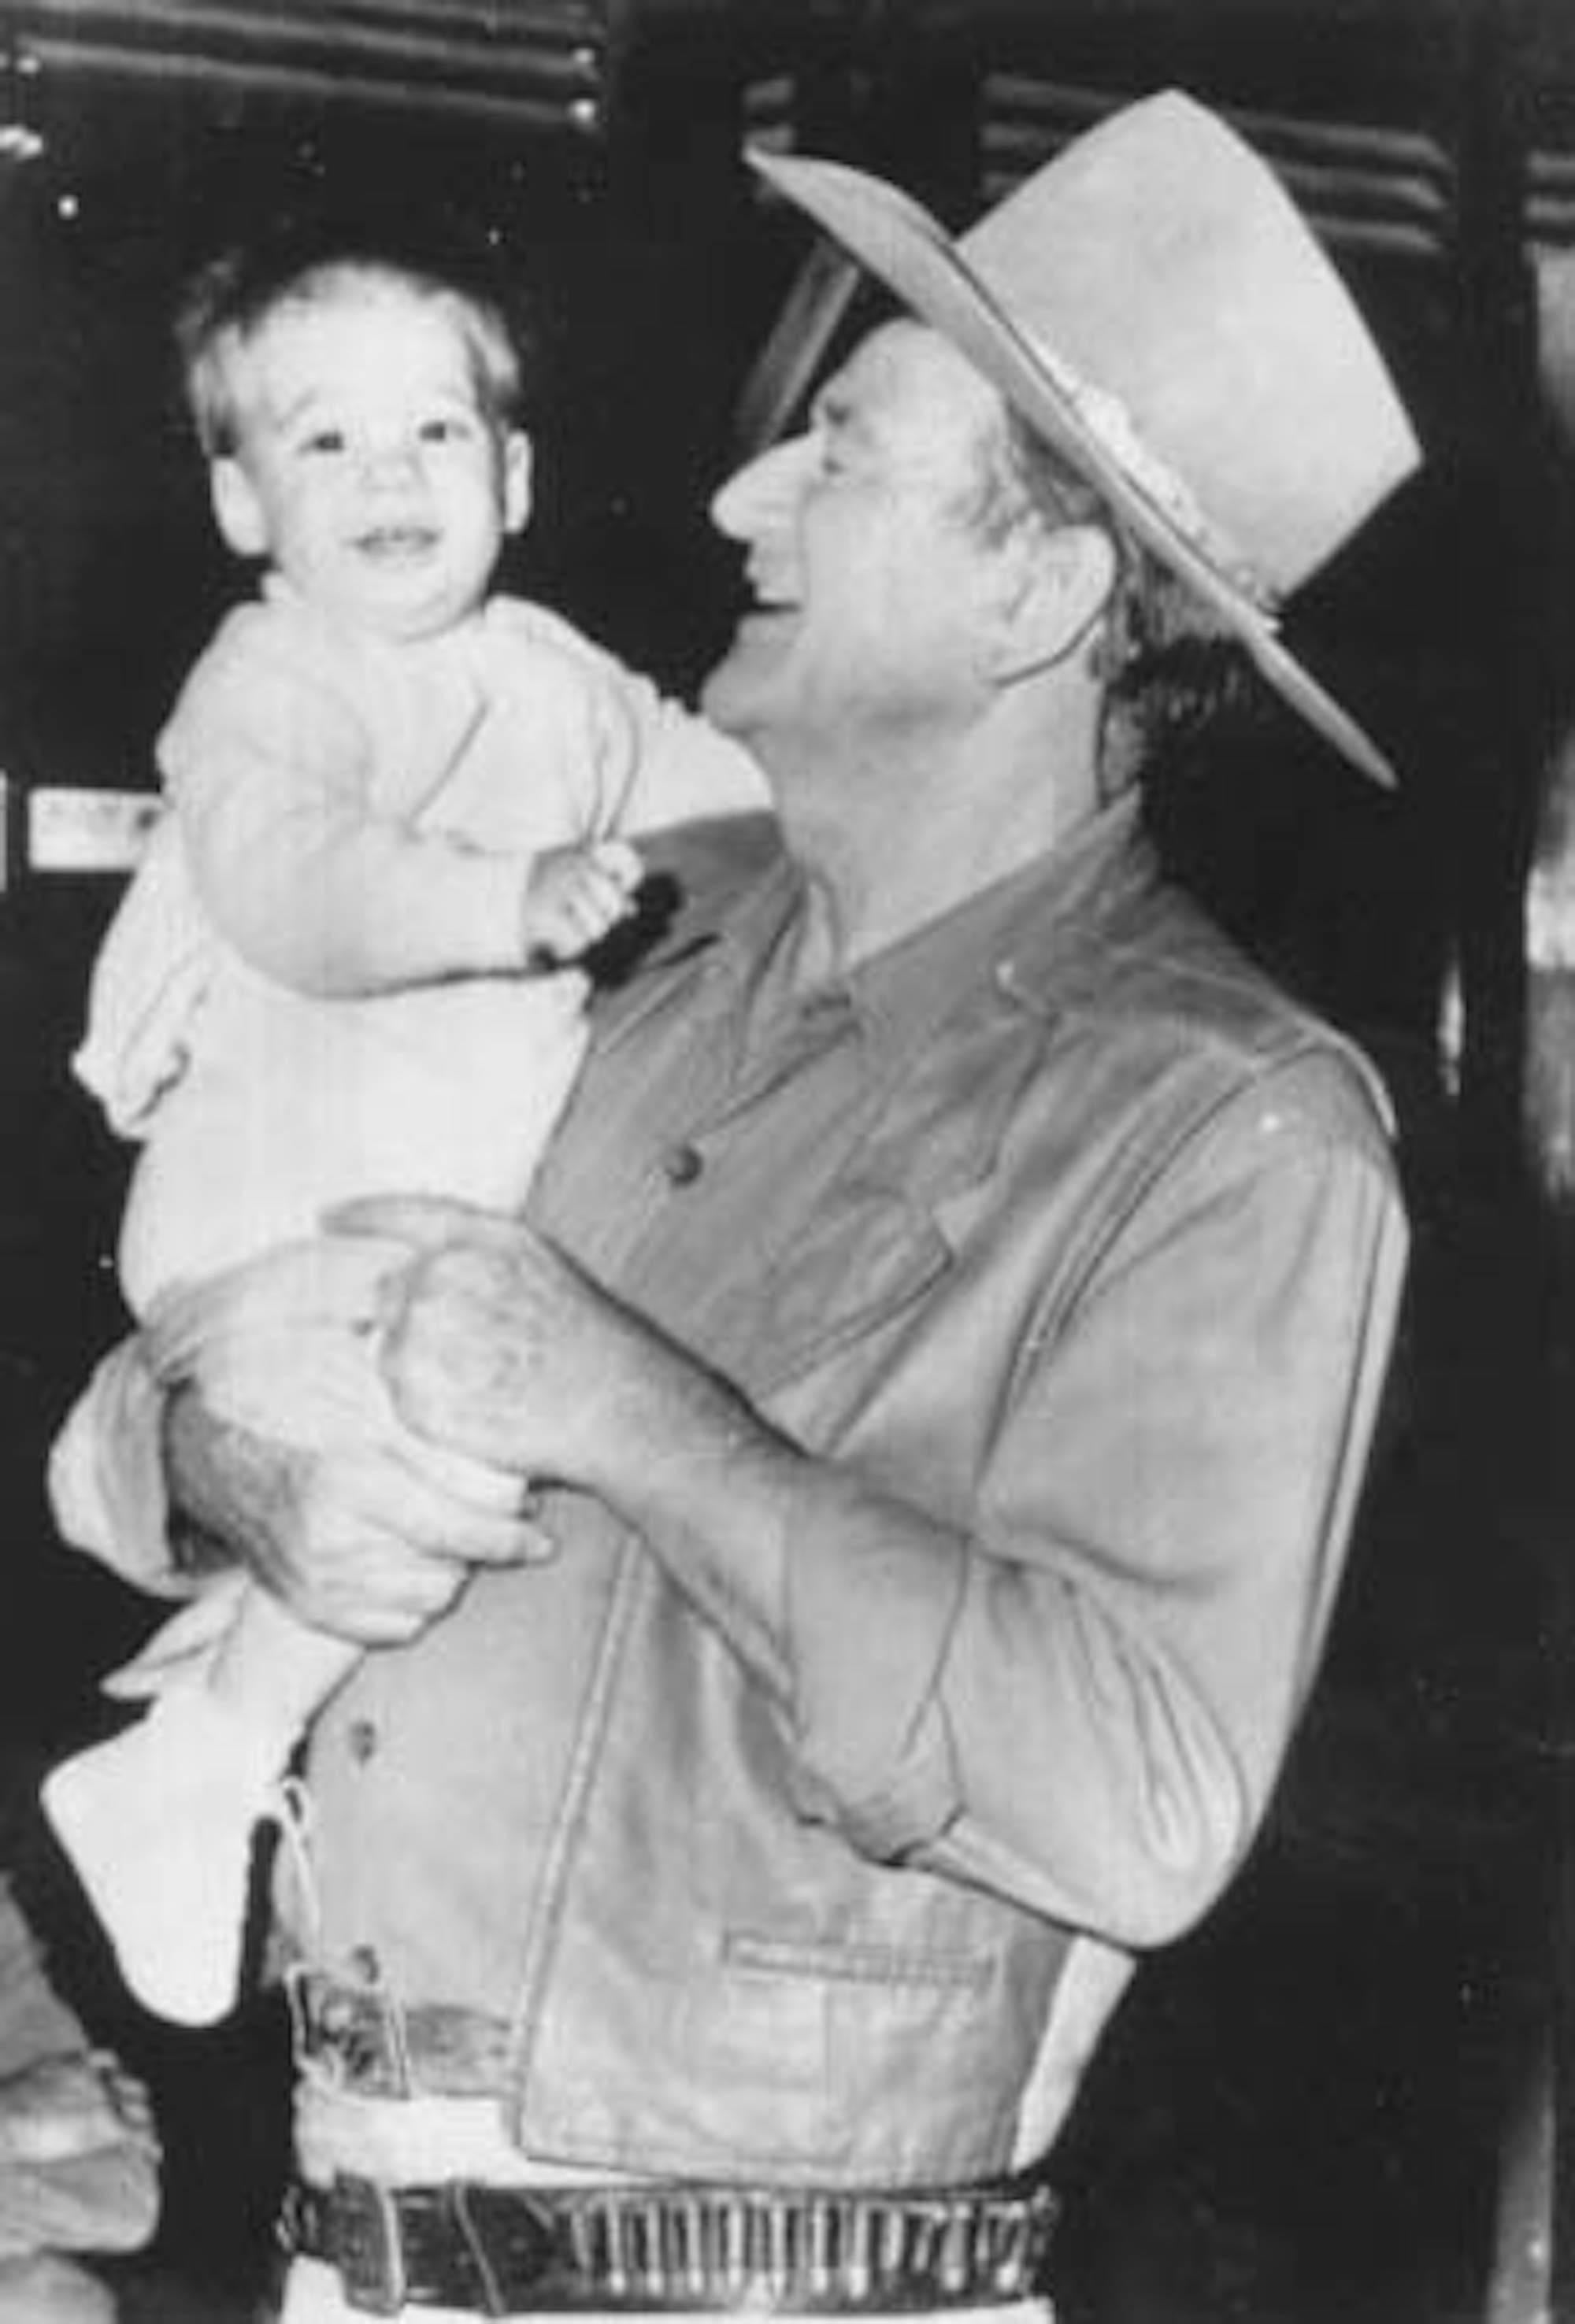 Unknown Figurative Photograph - John Wayne with his grandson - Vintage Photo - 1970s